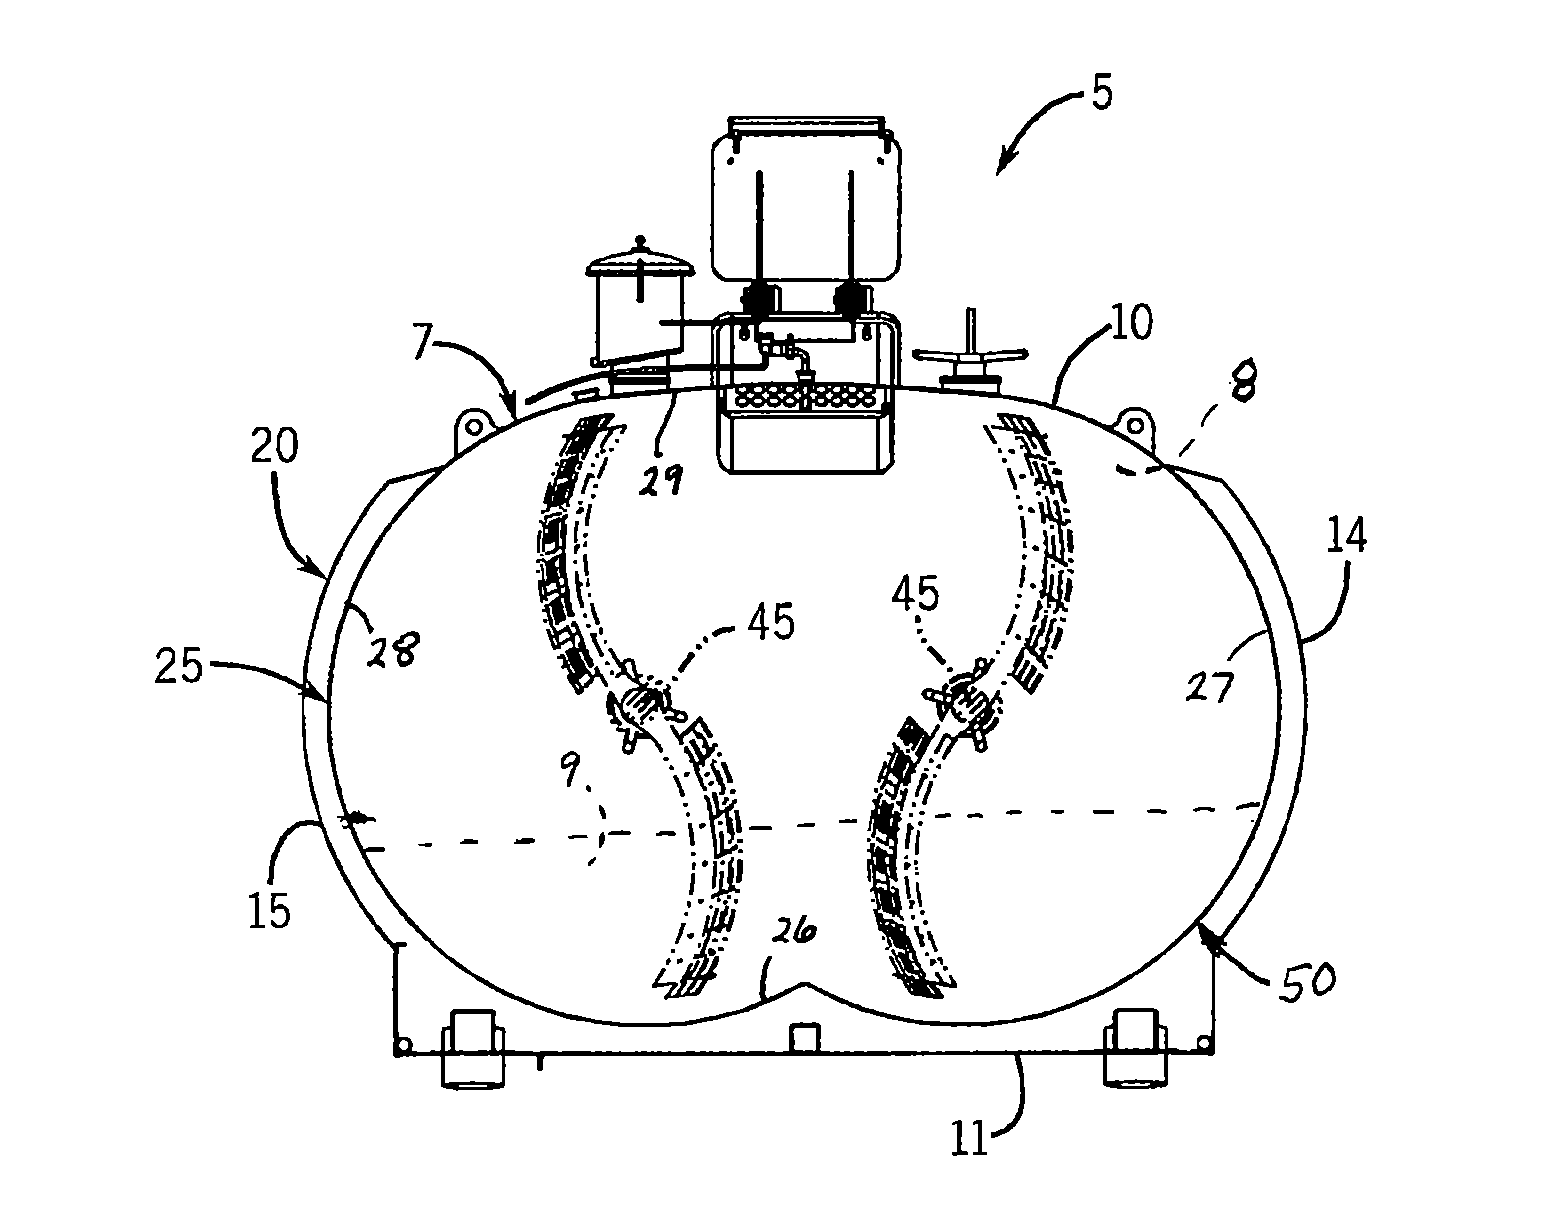 Food processing vat with heat exchangers